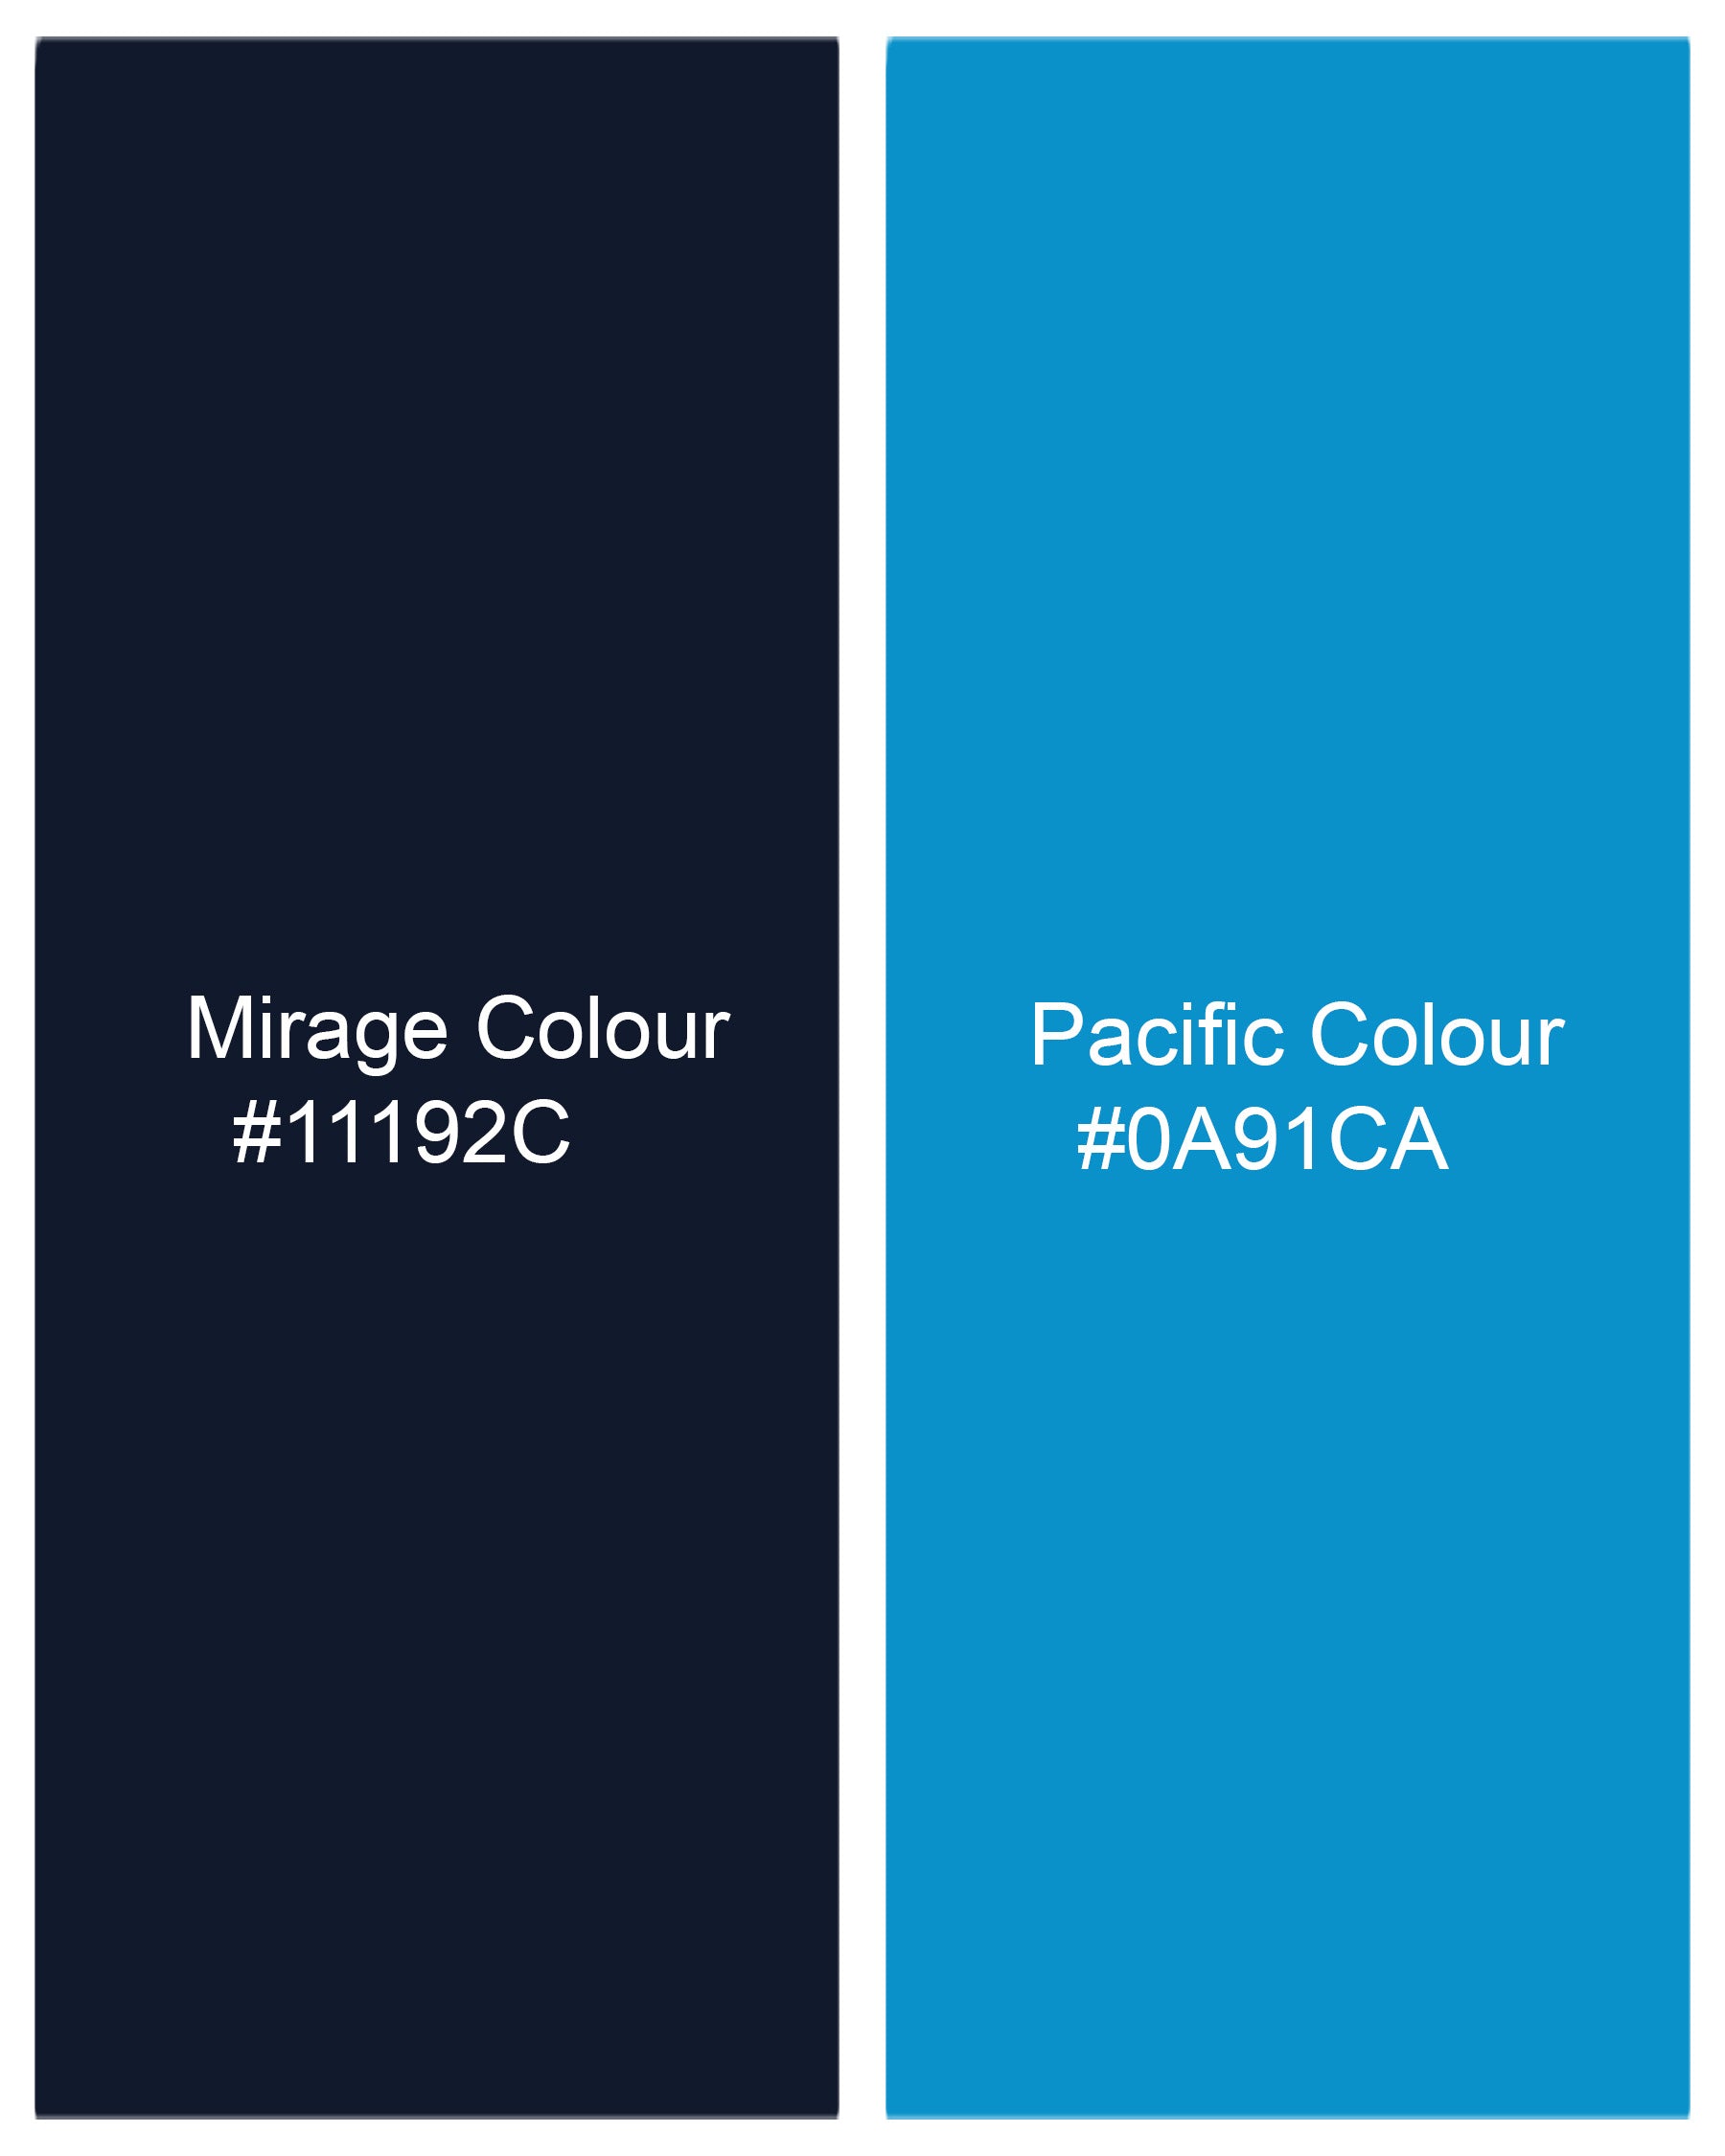 Mirage Navy Blue and Pacific Blue Plaid Dobby Textured Premium Giza Cotton Shirt 7701-BD-BLE-38,7701-BD-BLE-38,7701-BD-BLE-39,7701-BD-BLE-39,7701-BD-BLE-40,7701-BD-BLE-40,7701-BD-BLE-42,7701-BD-BLE-42,7701-BD-BLE-44,7701-BD-BLE-44,7701-BD-BLE-46,7701-BD-BLE-46,7701-BD-BLE-48,7701-BD-BLE-48,7701-BD-BLE-50,7701-BD-BLE-50,7701-BD-BLE-52,7701-BD-BLE-52